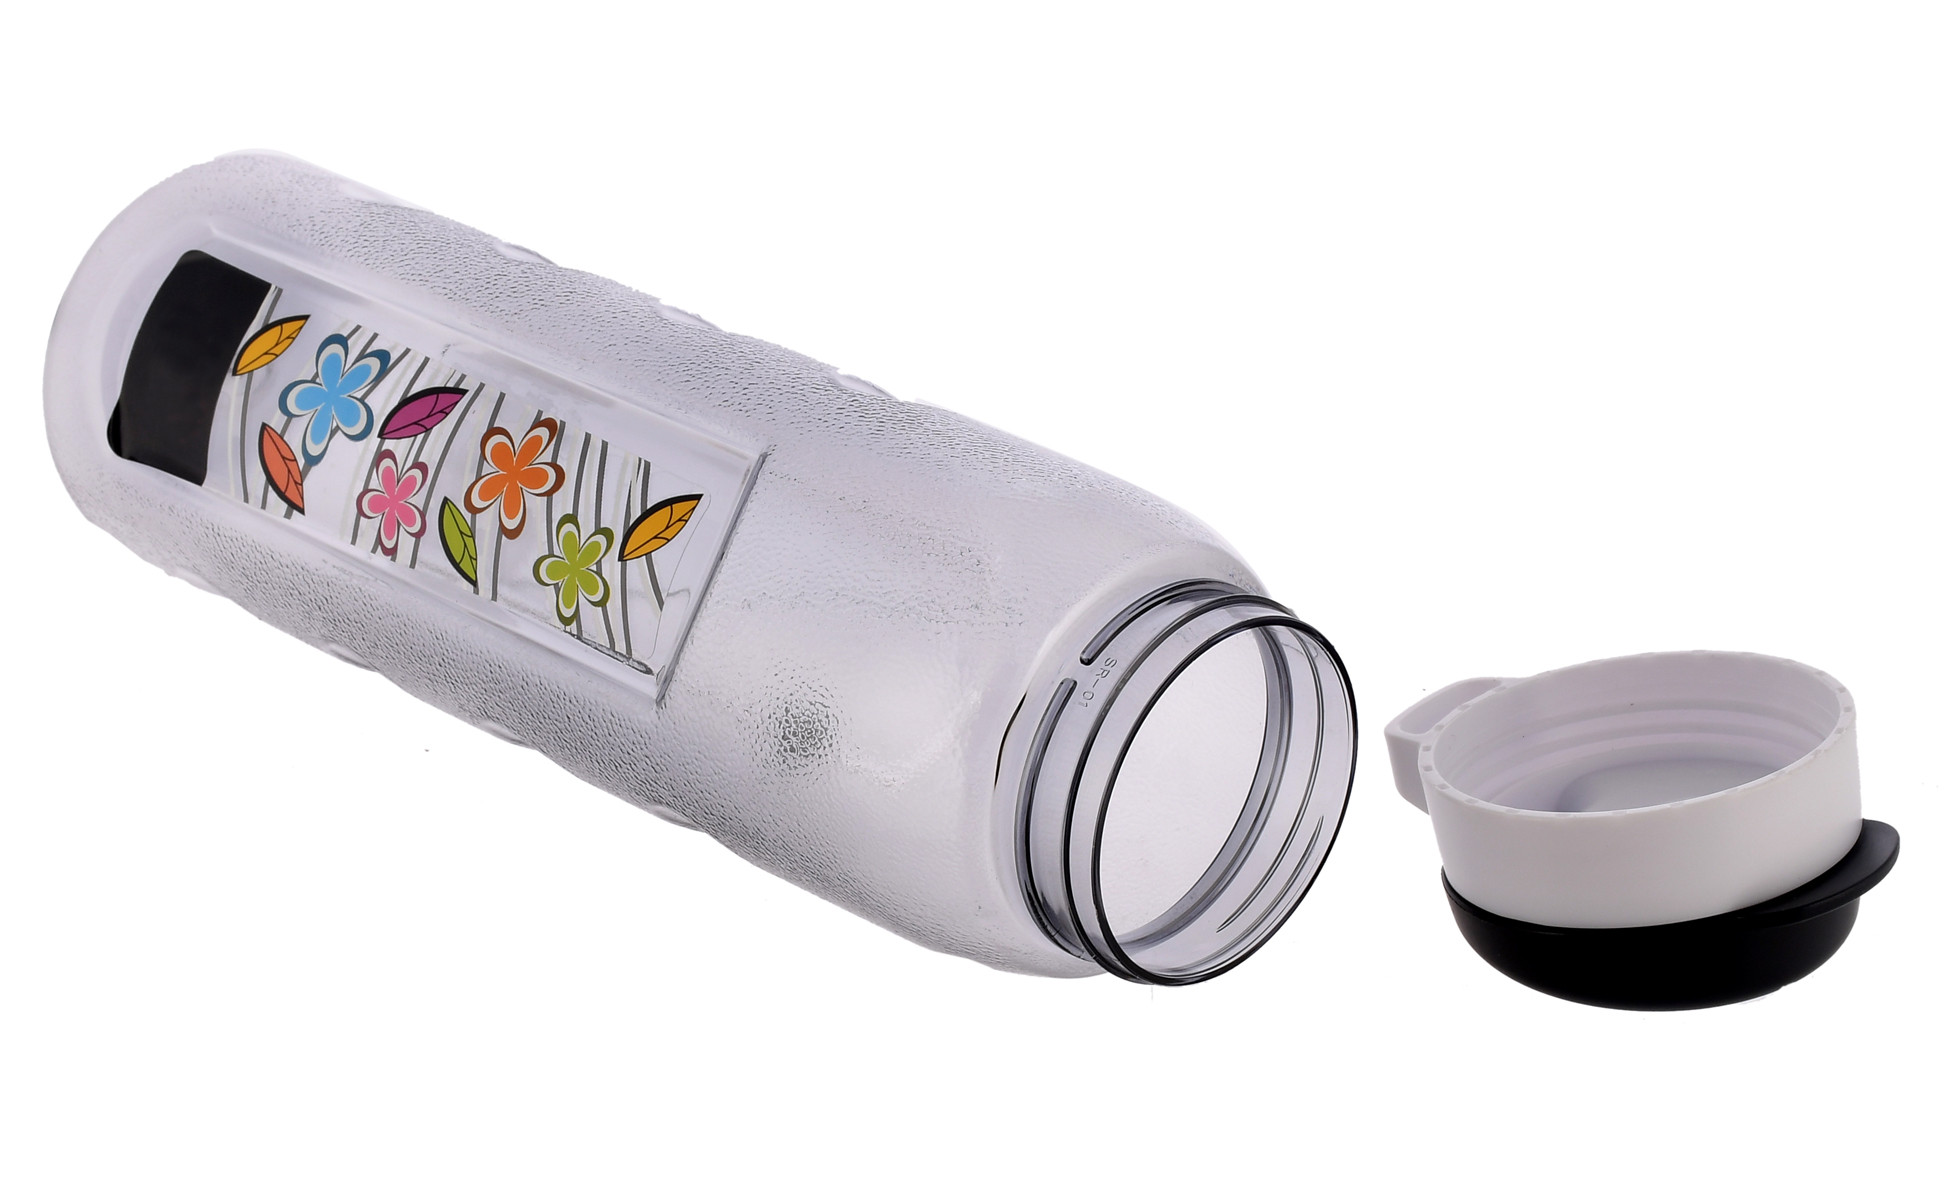 Kuber Industries Unbreakable BPA & Leak Free Plastic Water Bottle With Sipper-1 Litre, Pack of 6 (Pruple & Black)